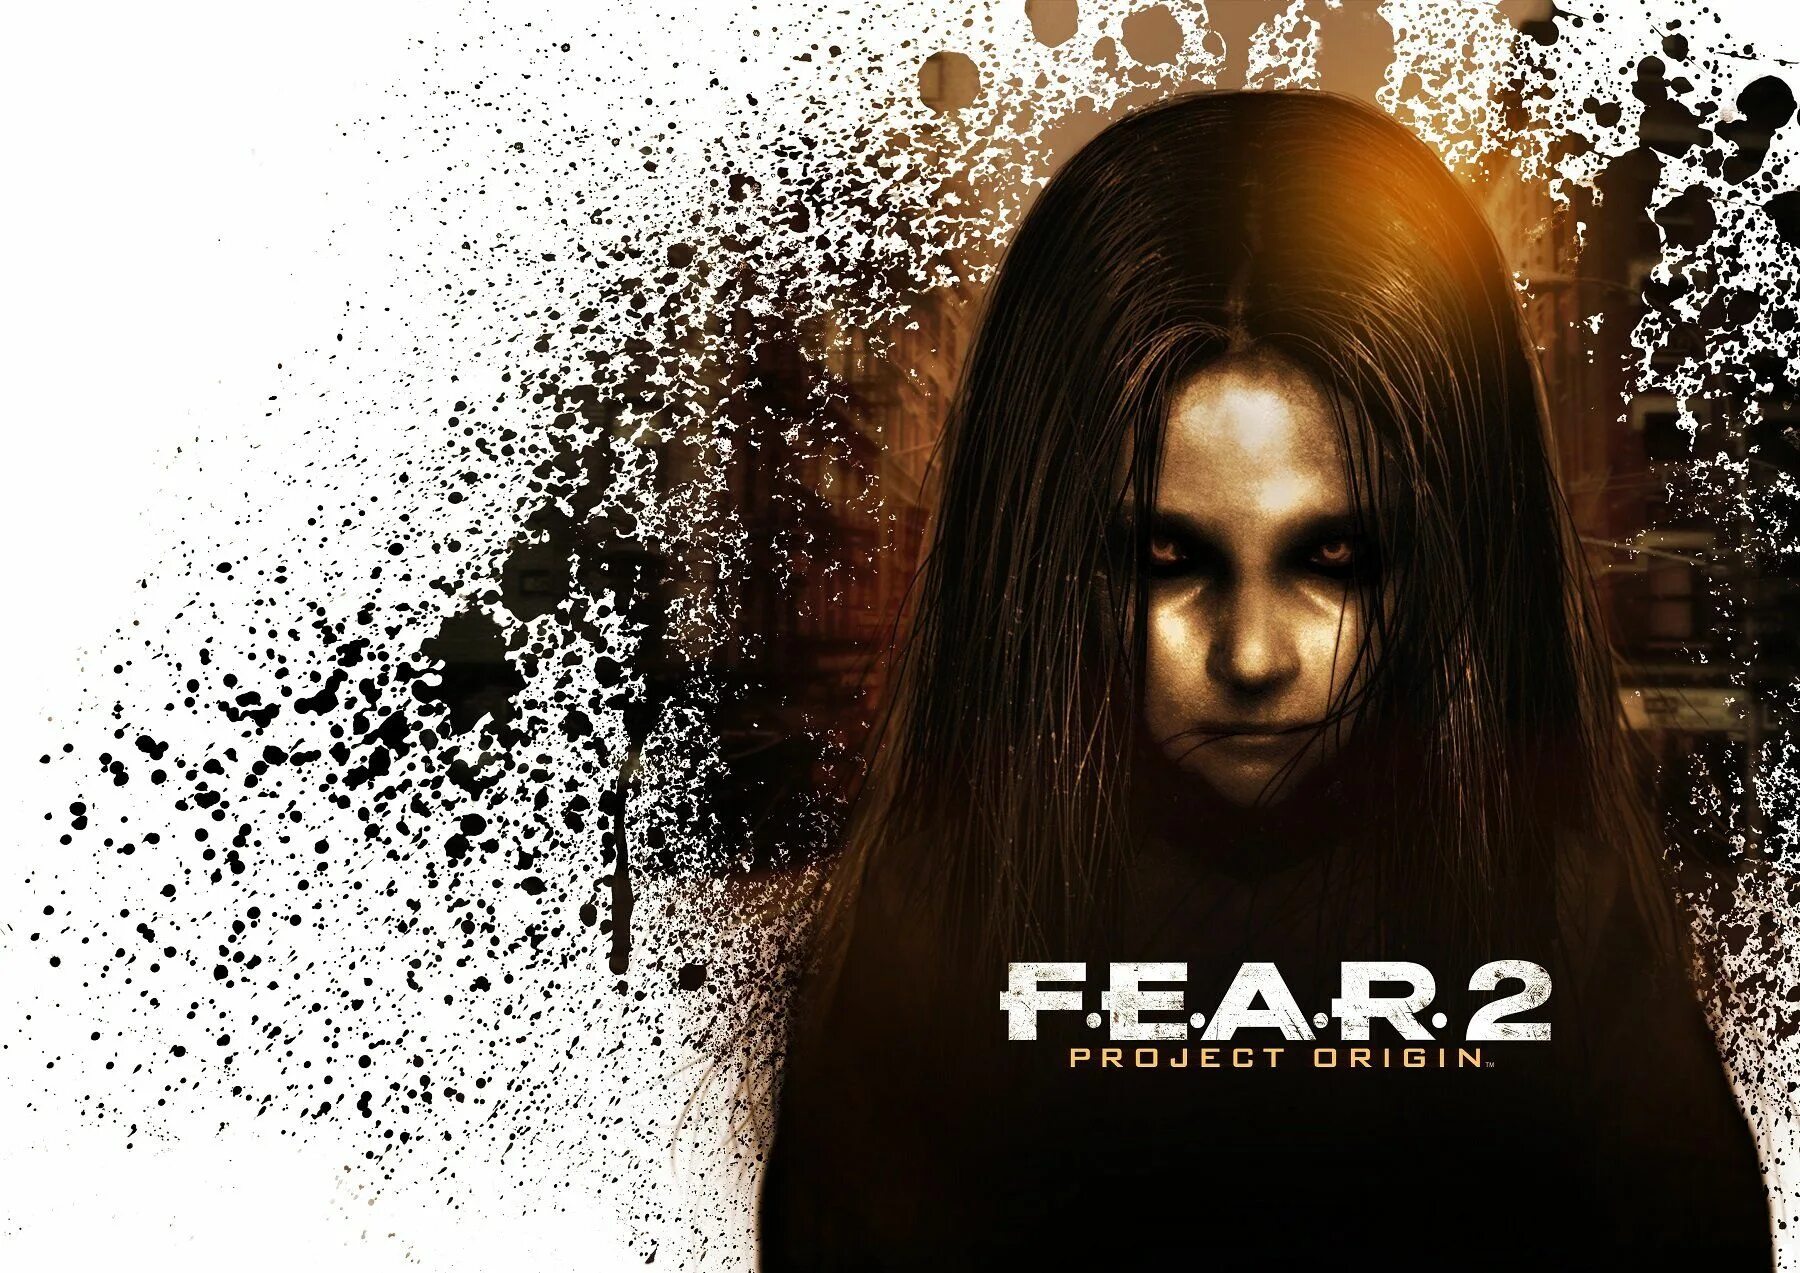 Fear 2 Project Origin Постер. F.E.A.R. 2 Project Origin обложка. Kind fear